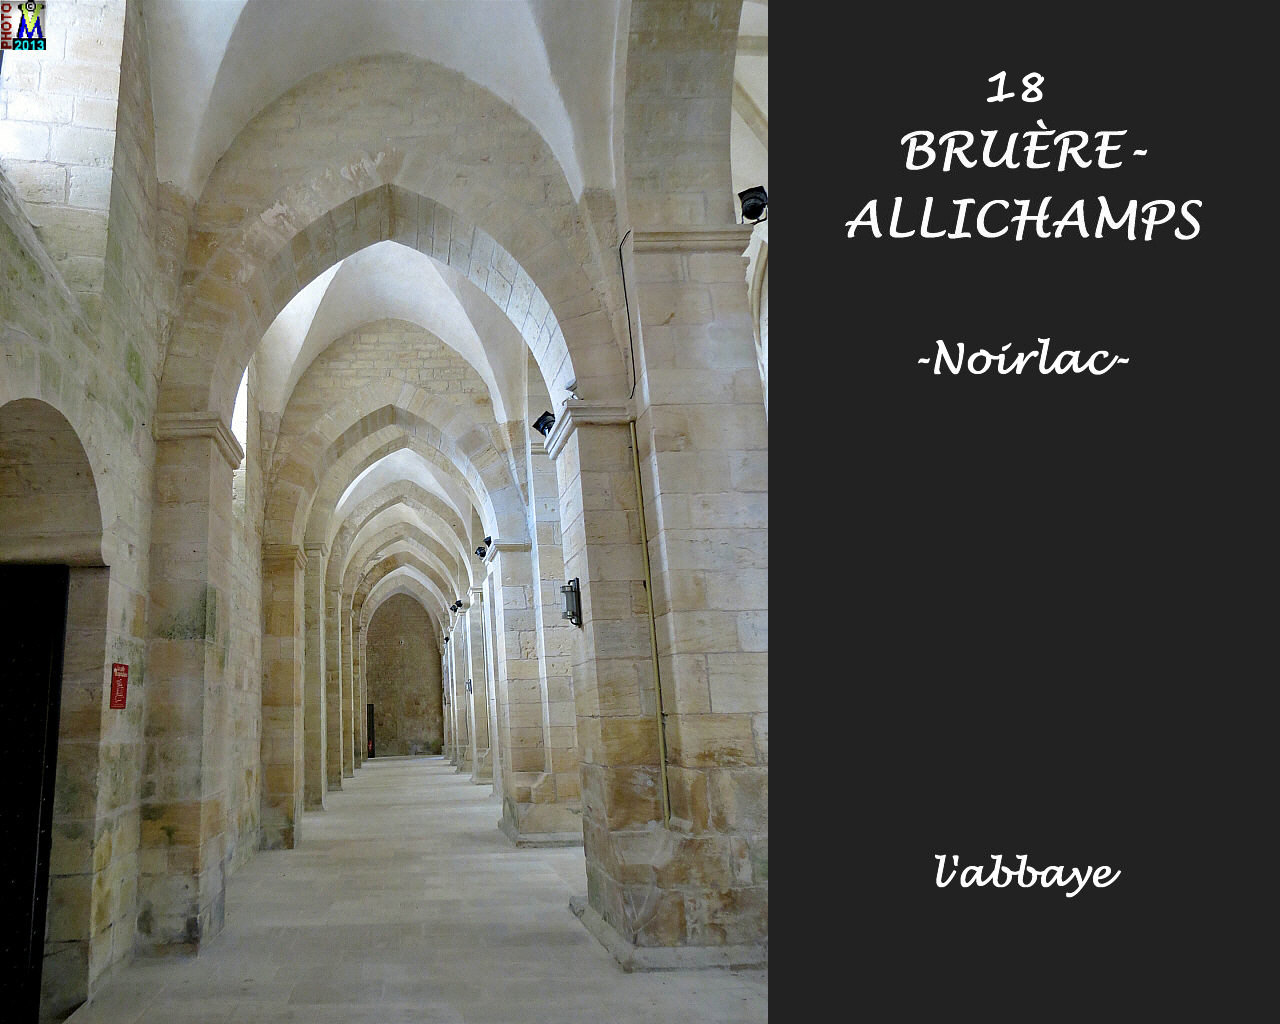 18BRUERE-ALLICHAMPSzNOIRLAC_abbaye_252.jpg